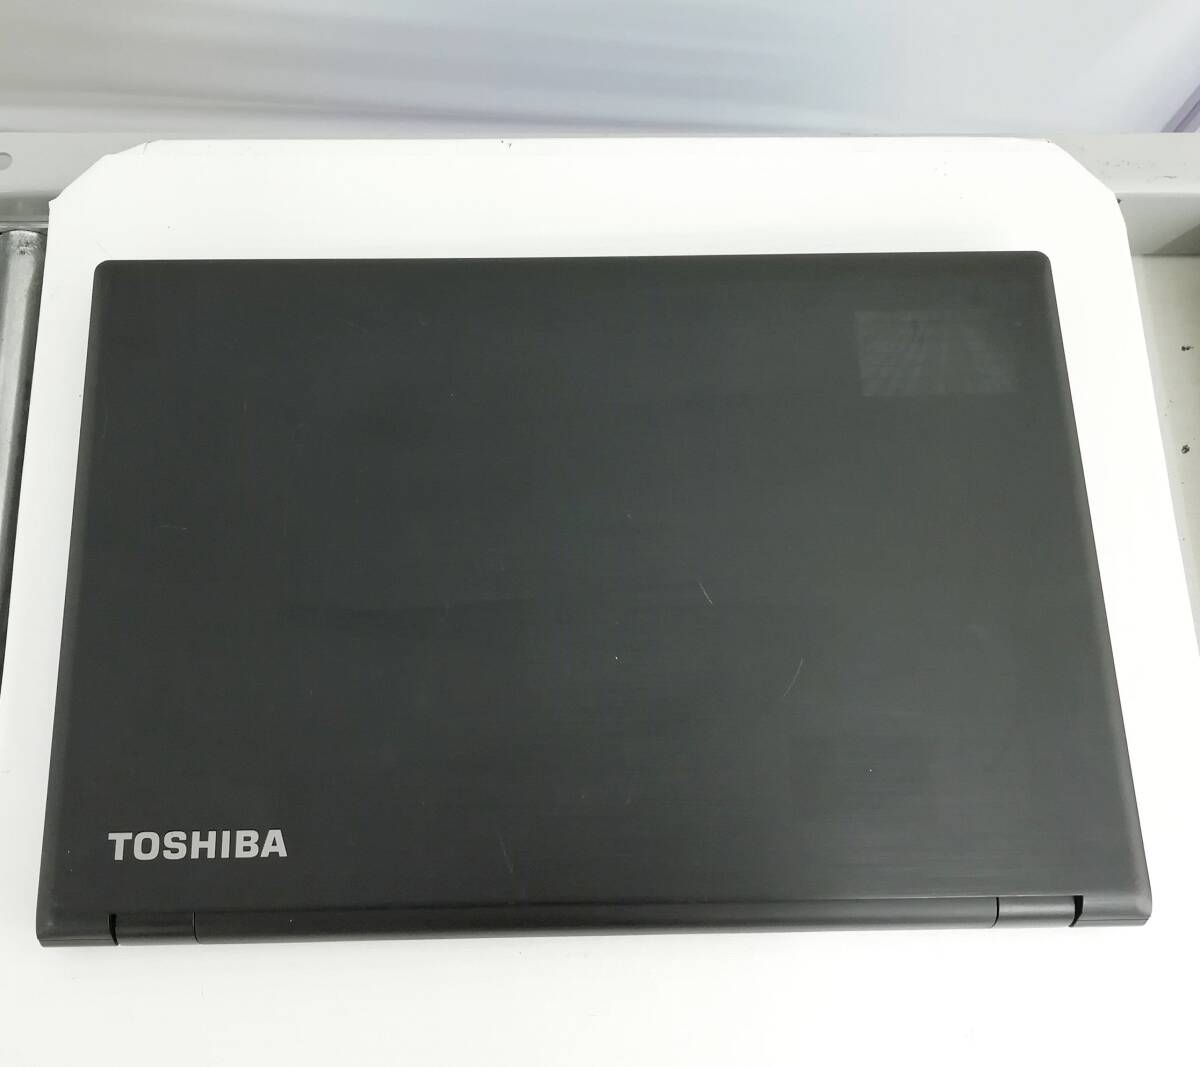 TOSHIBA/東芝 dynabook B65/Y Core i7 5600U メモリ8GB 新品SSD 2.5インチ256GB Windows 10 Pro 64bit 即納 一週間返品保証【H24022004】_画像4